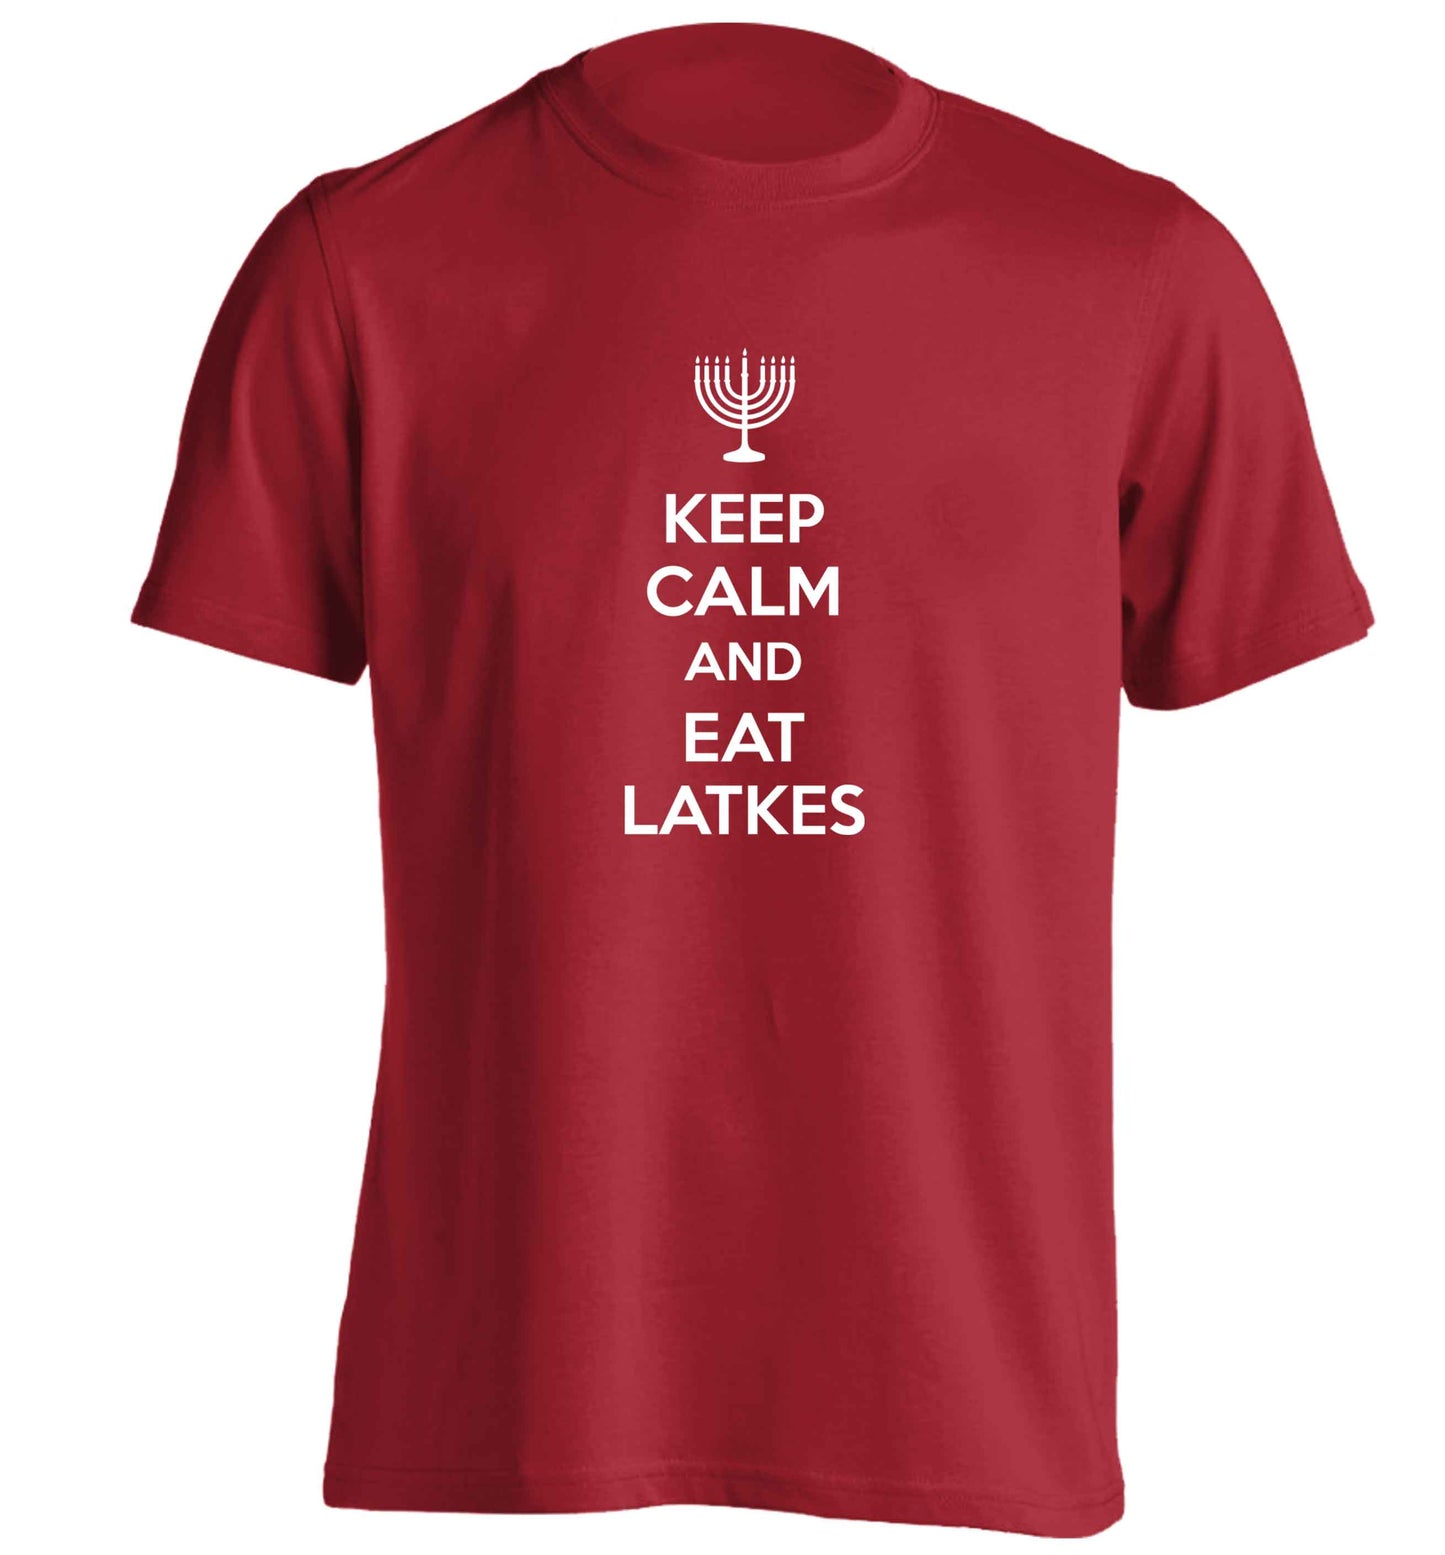 Keep calm and eat latkes adults unisex red Tshirt 2XL